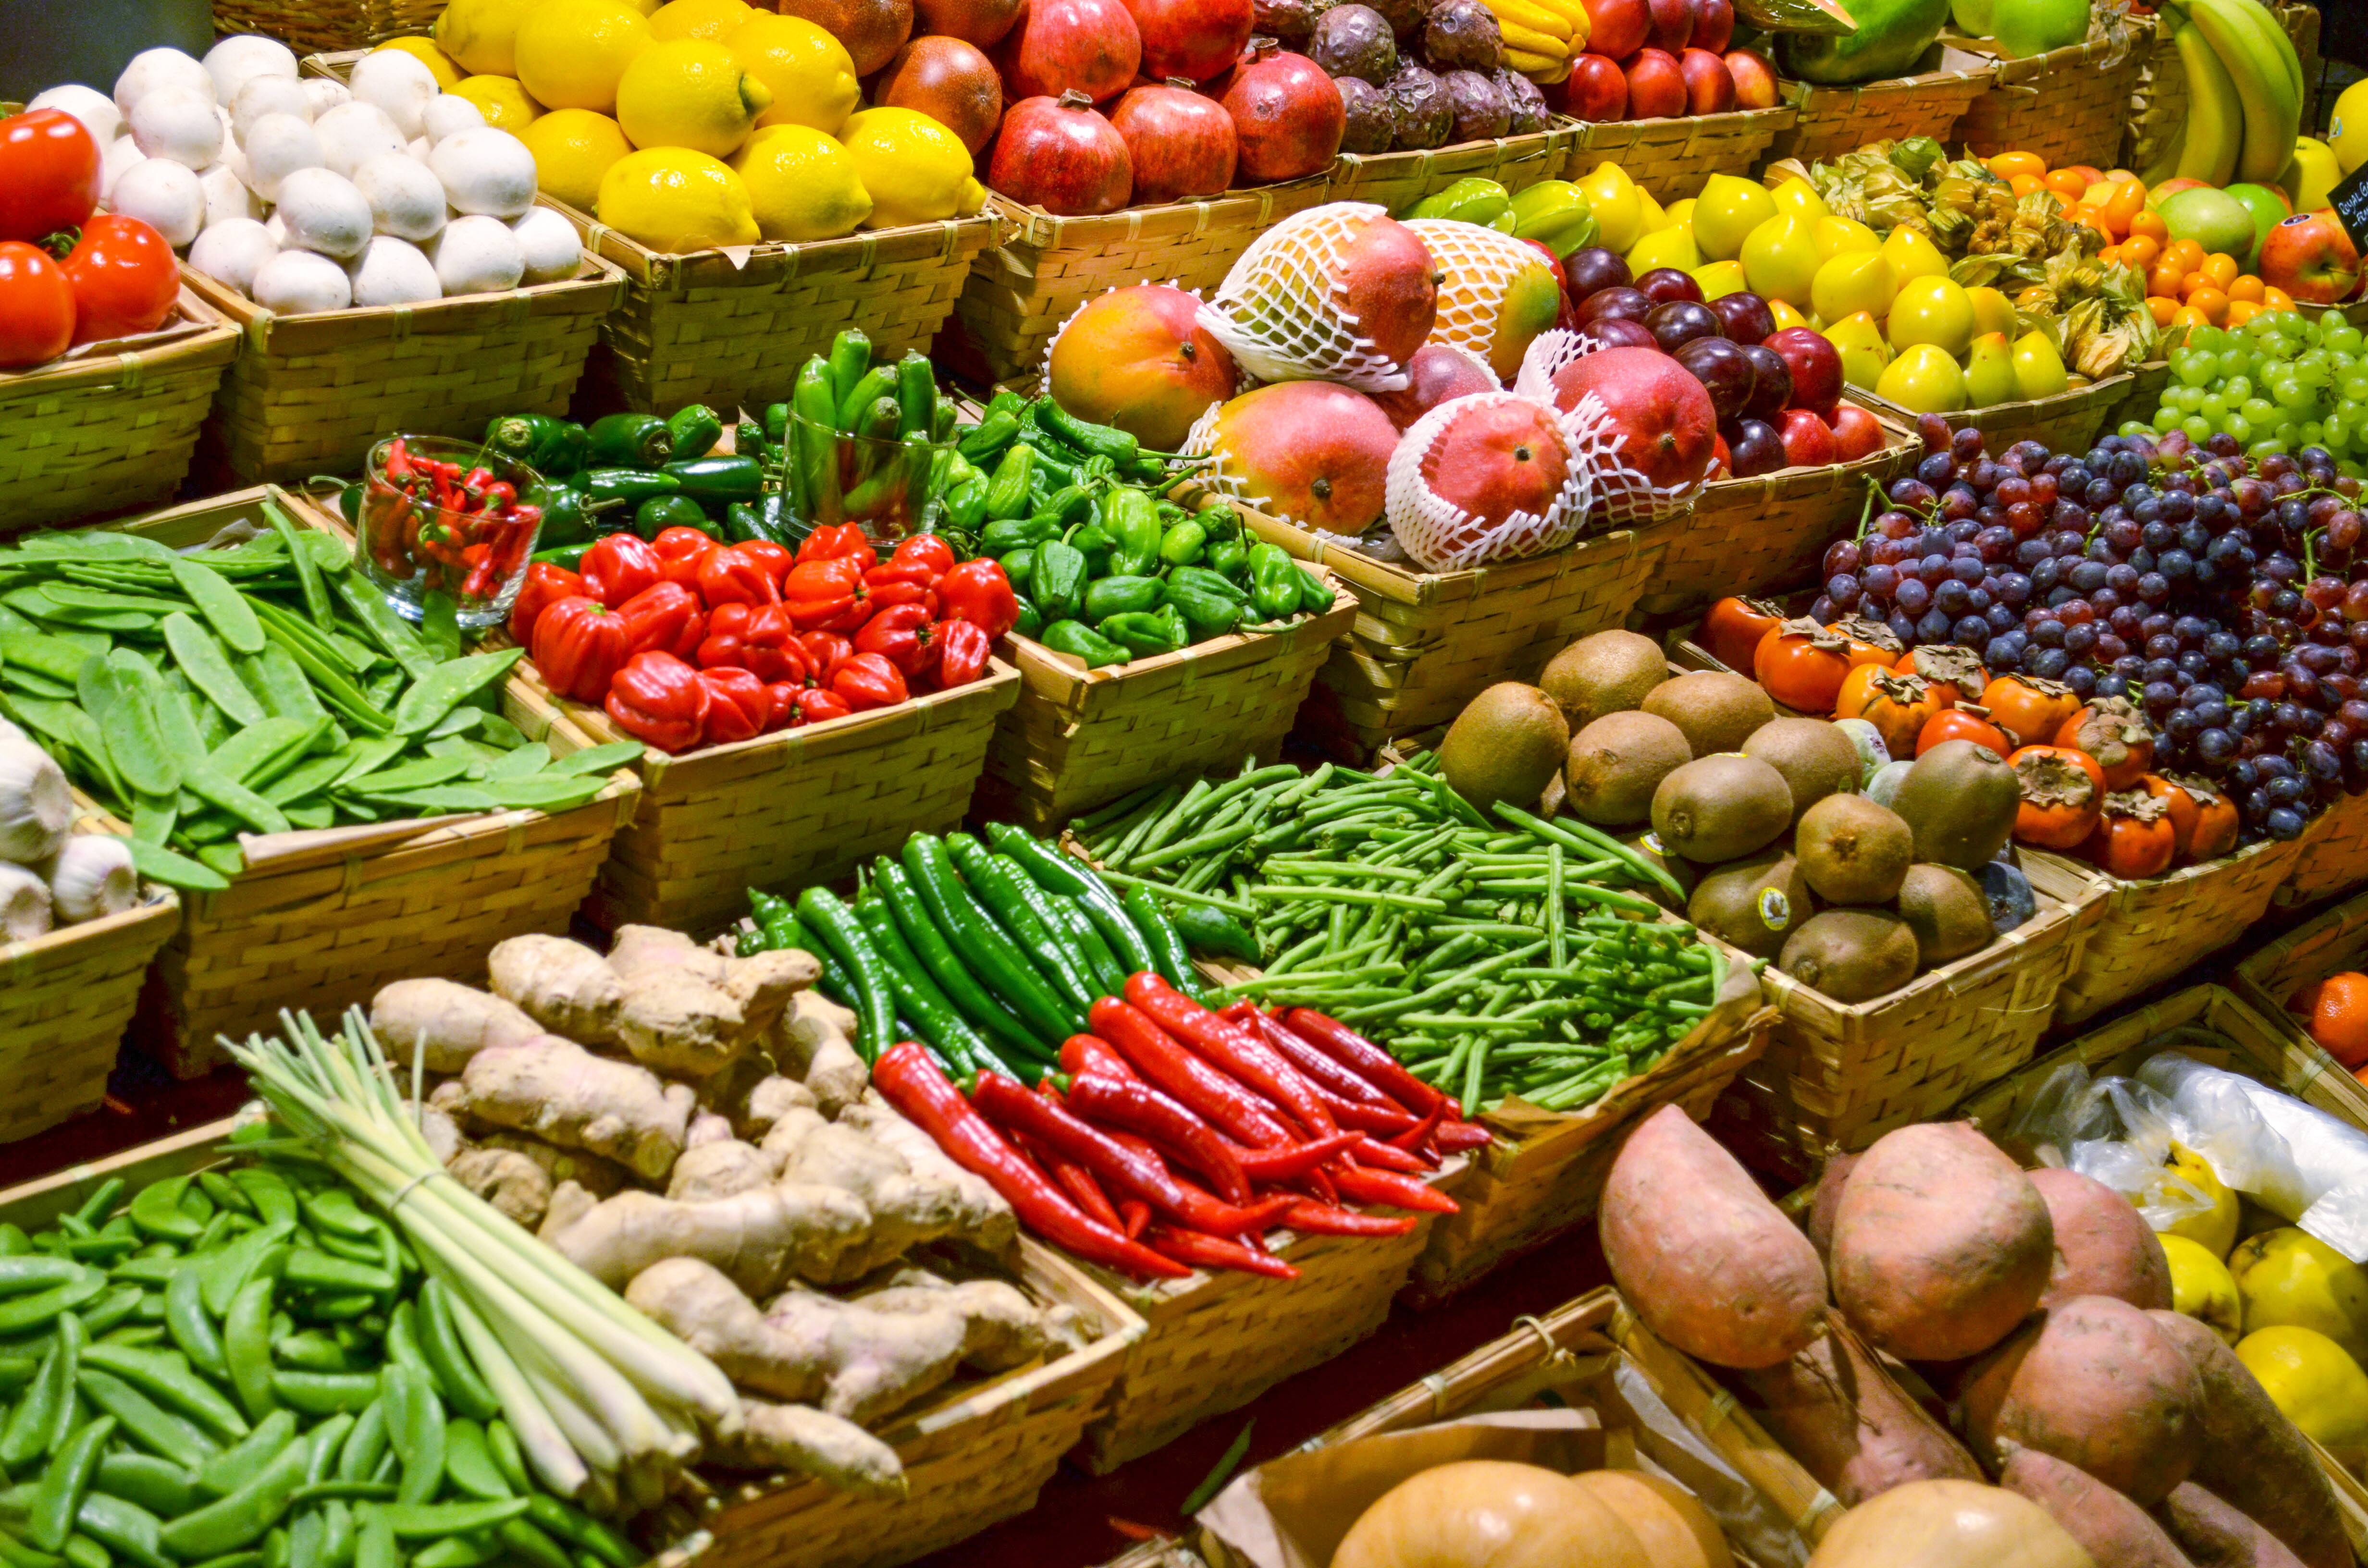 Consumer Health: Organic food 101 - Mayo Clinic News Network